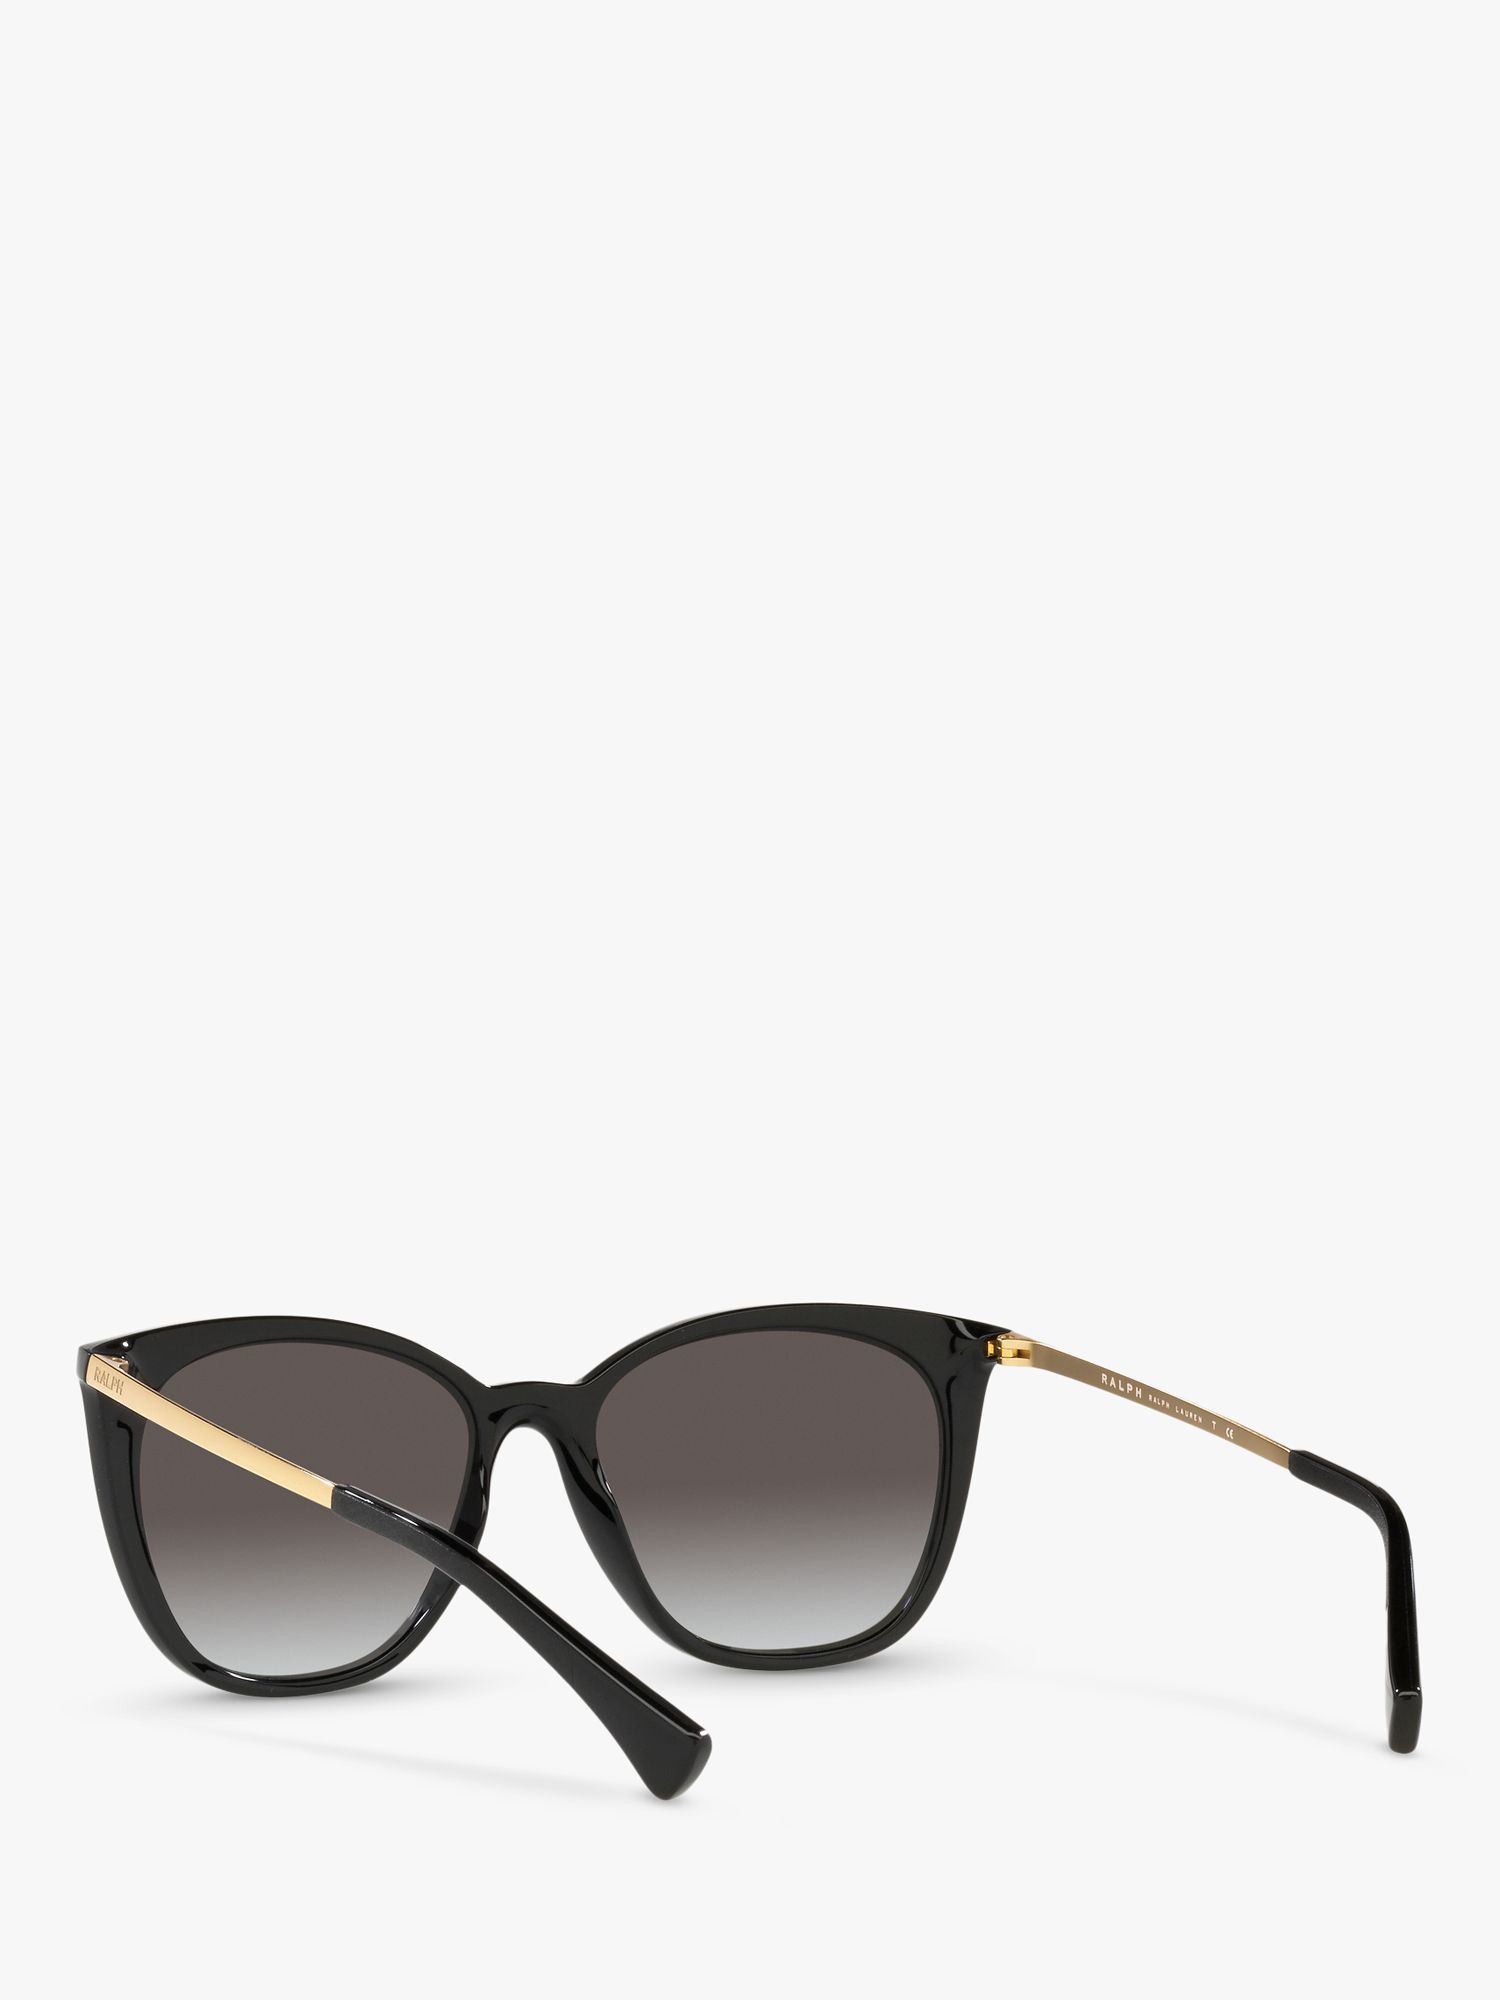 Ralph RA5280 Women's Cat's Eye Sunglasses, Shiny Black/Grey Gradient at  John Lewis u0026 Partners